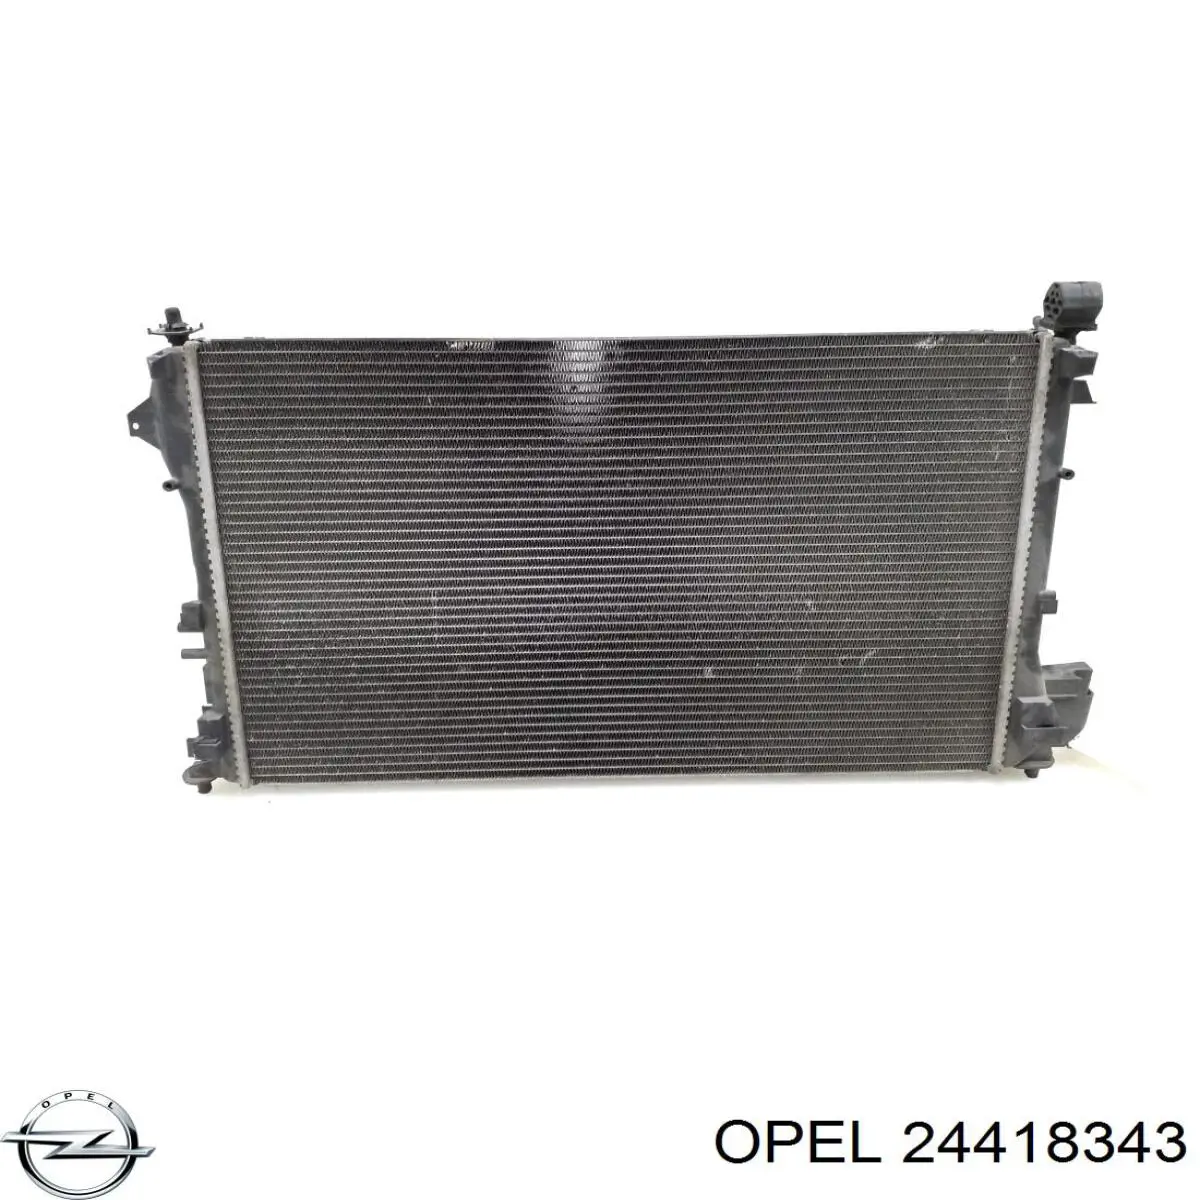 24418343 Opel радиатор